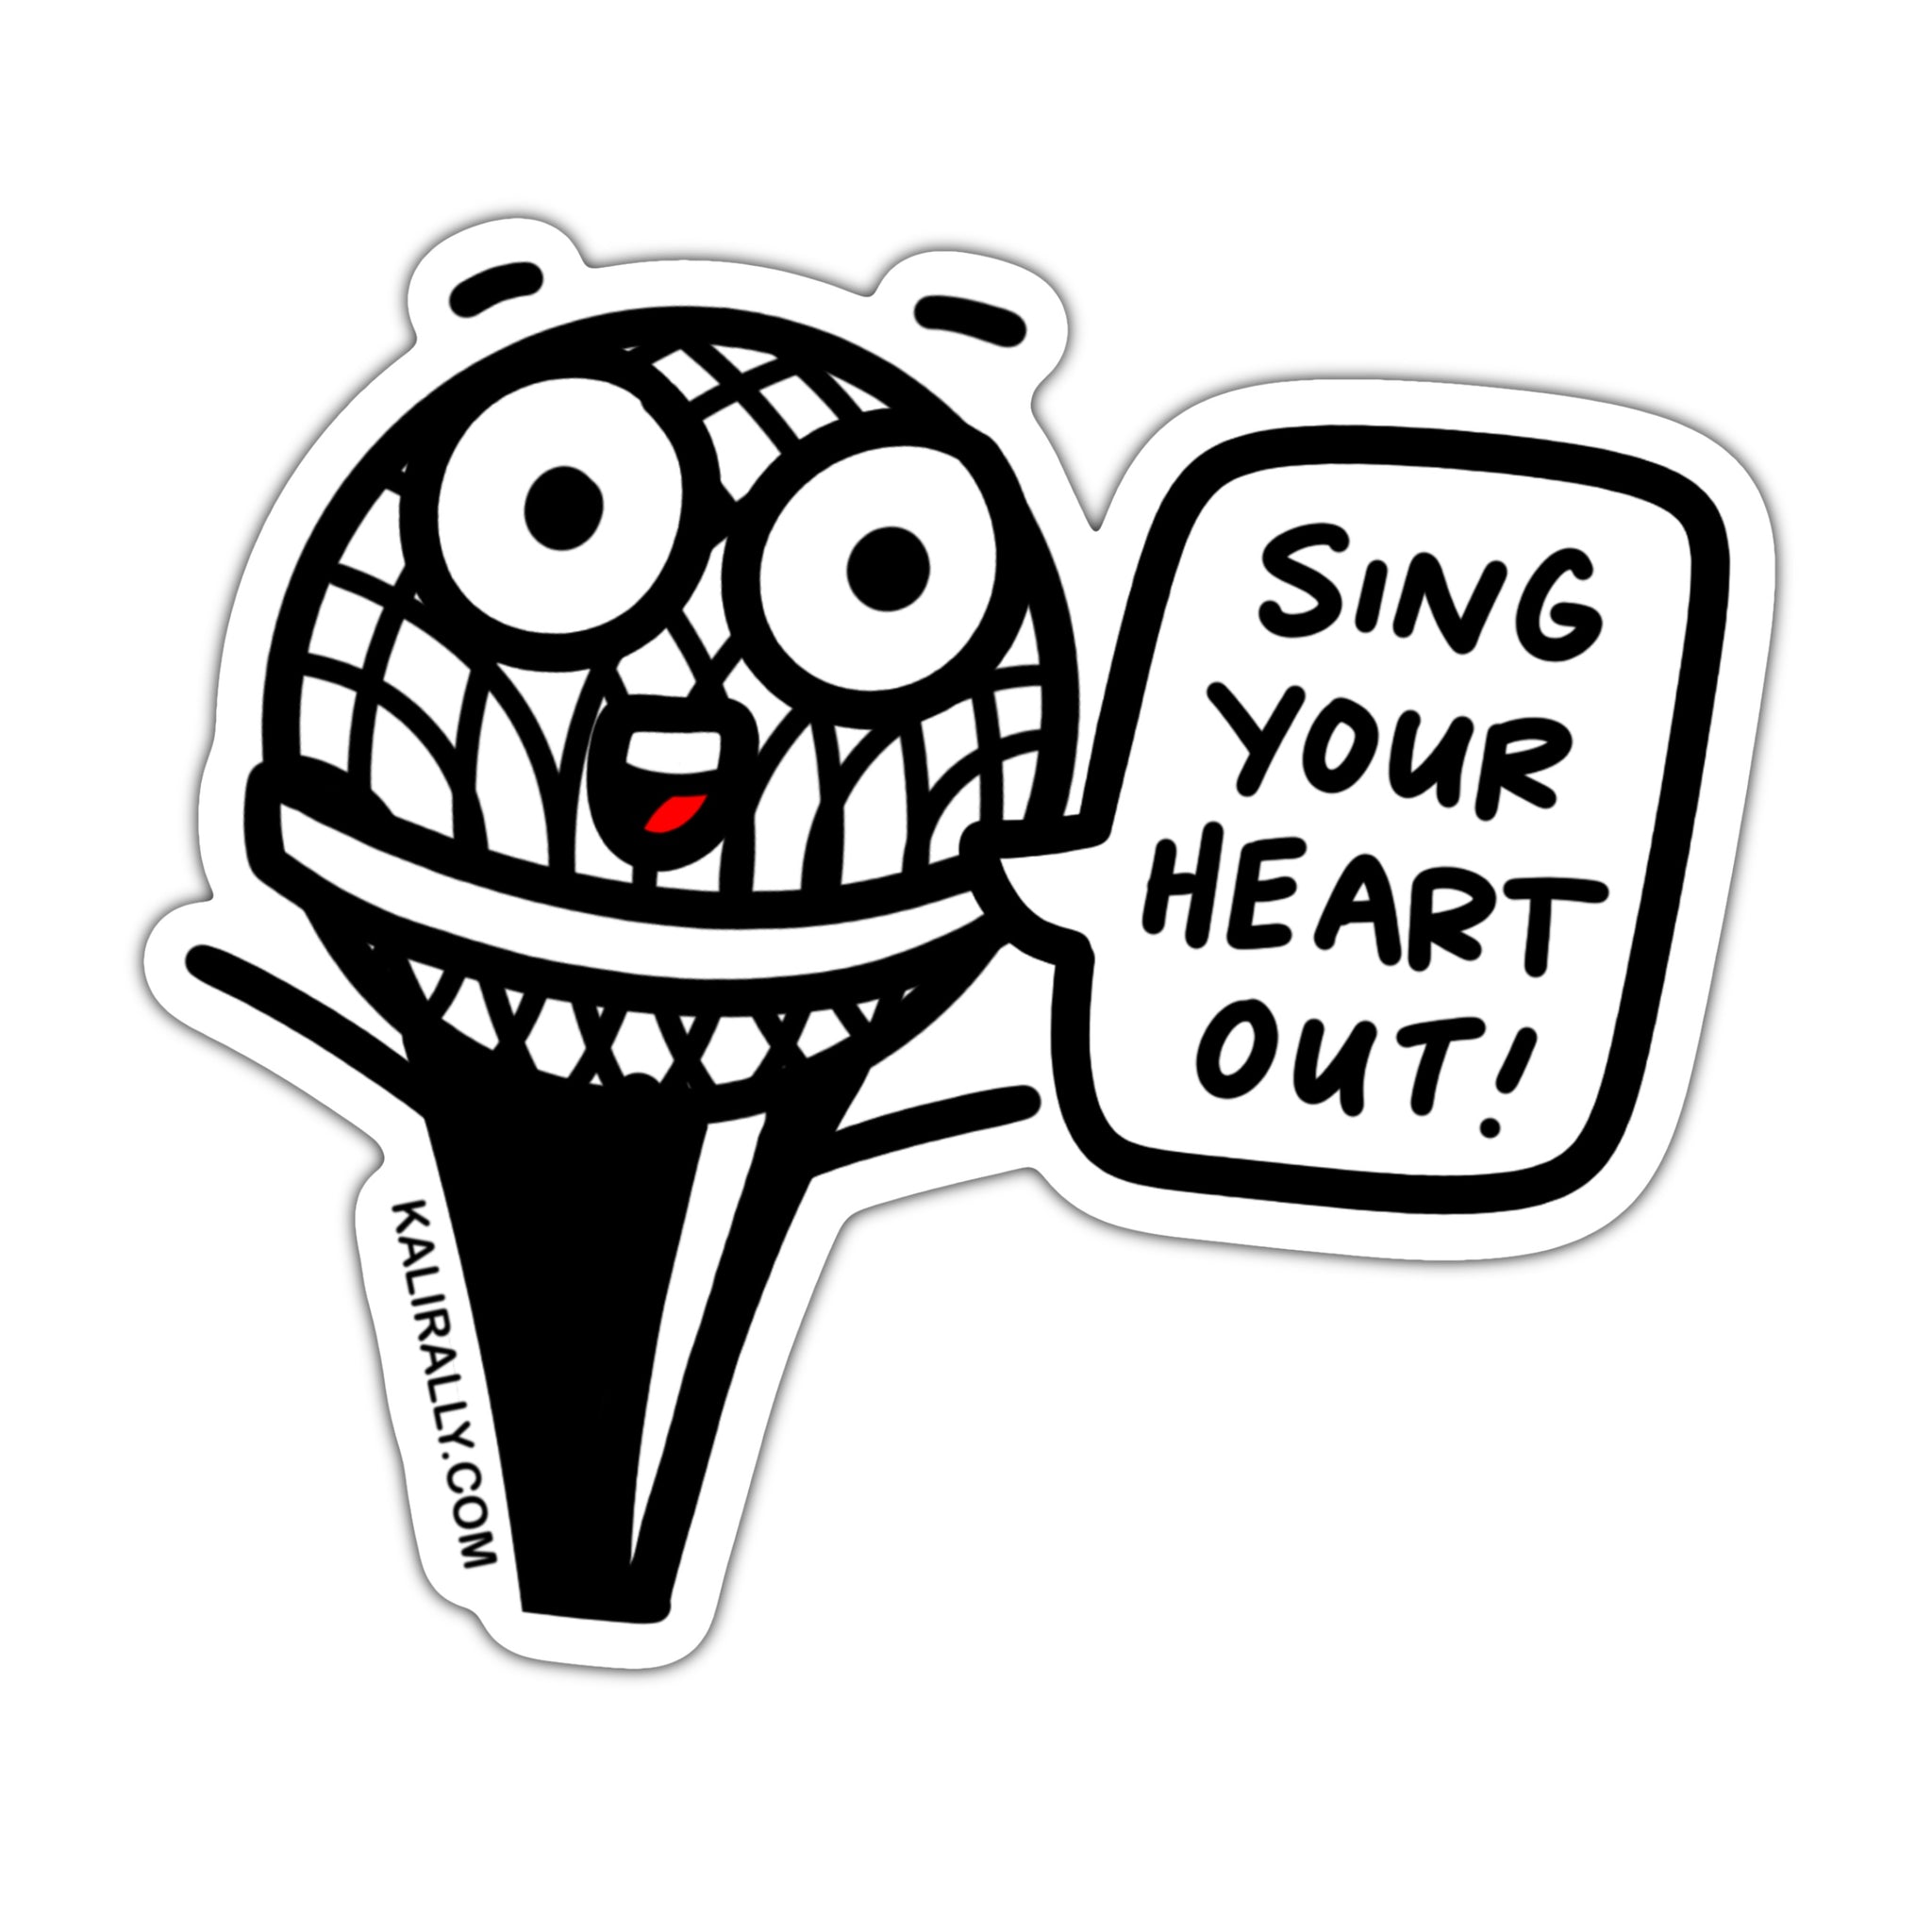 Sing your heart out sticker, microphone sticker, waterproof vinyl sticker